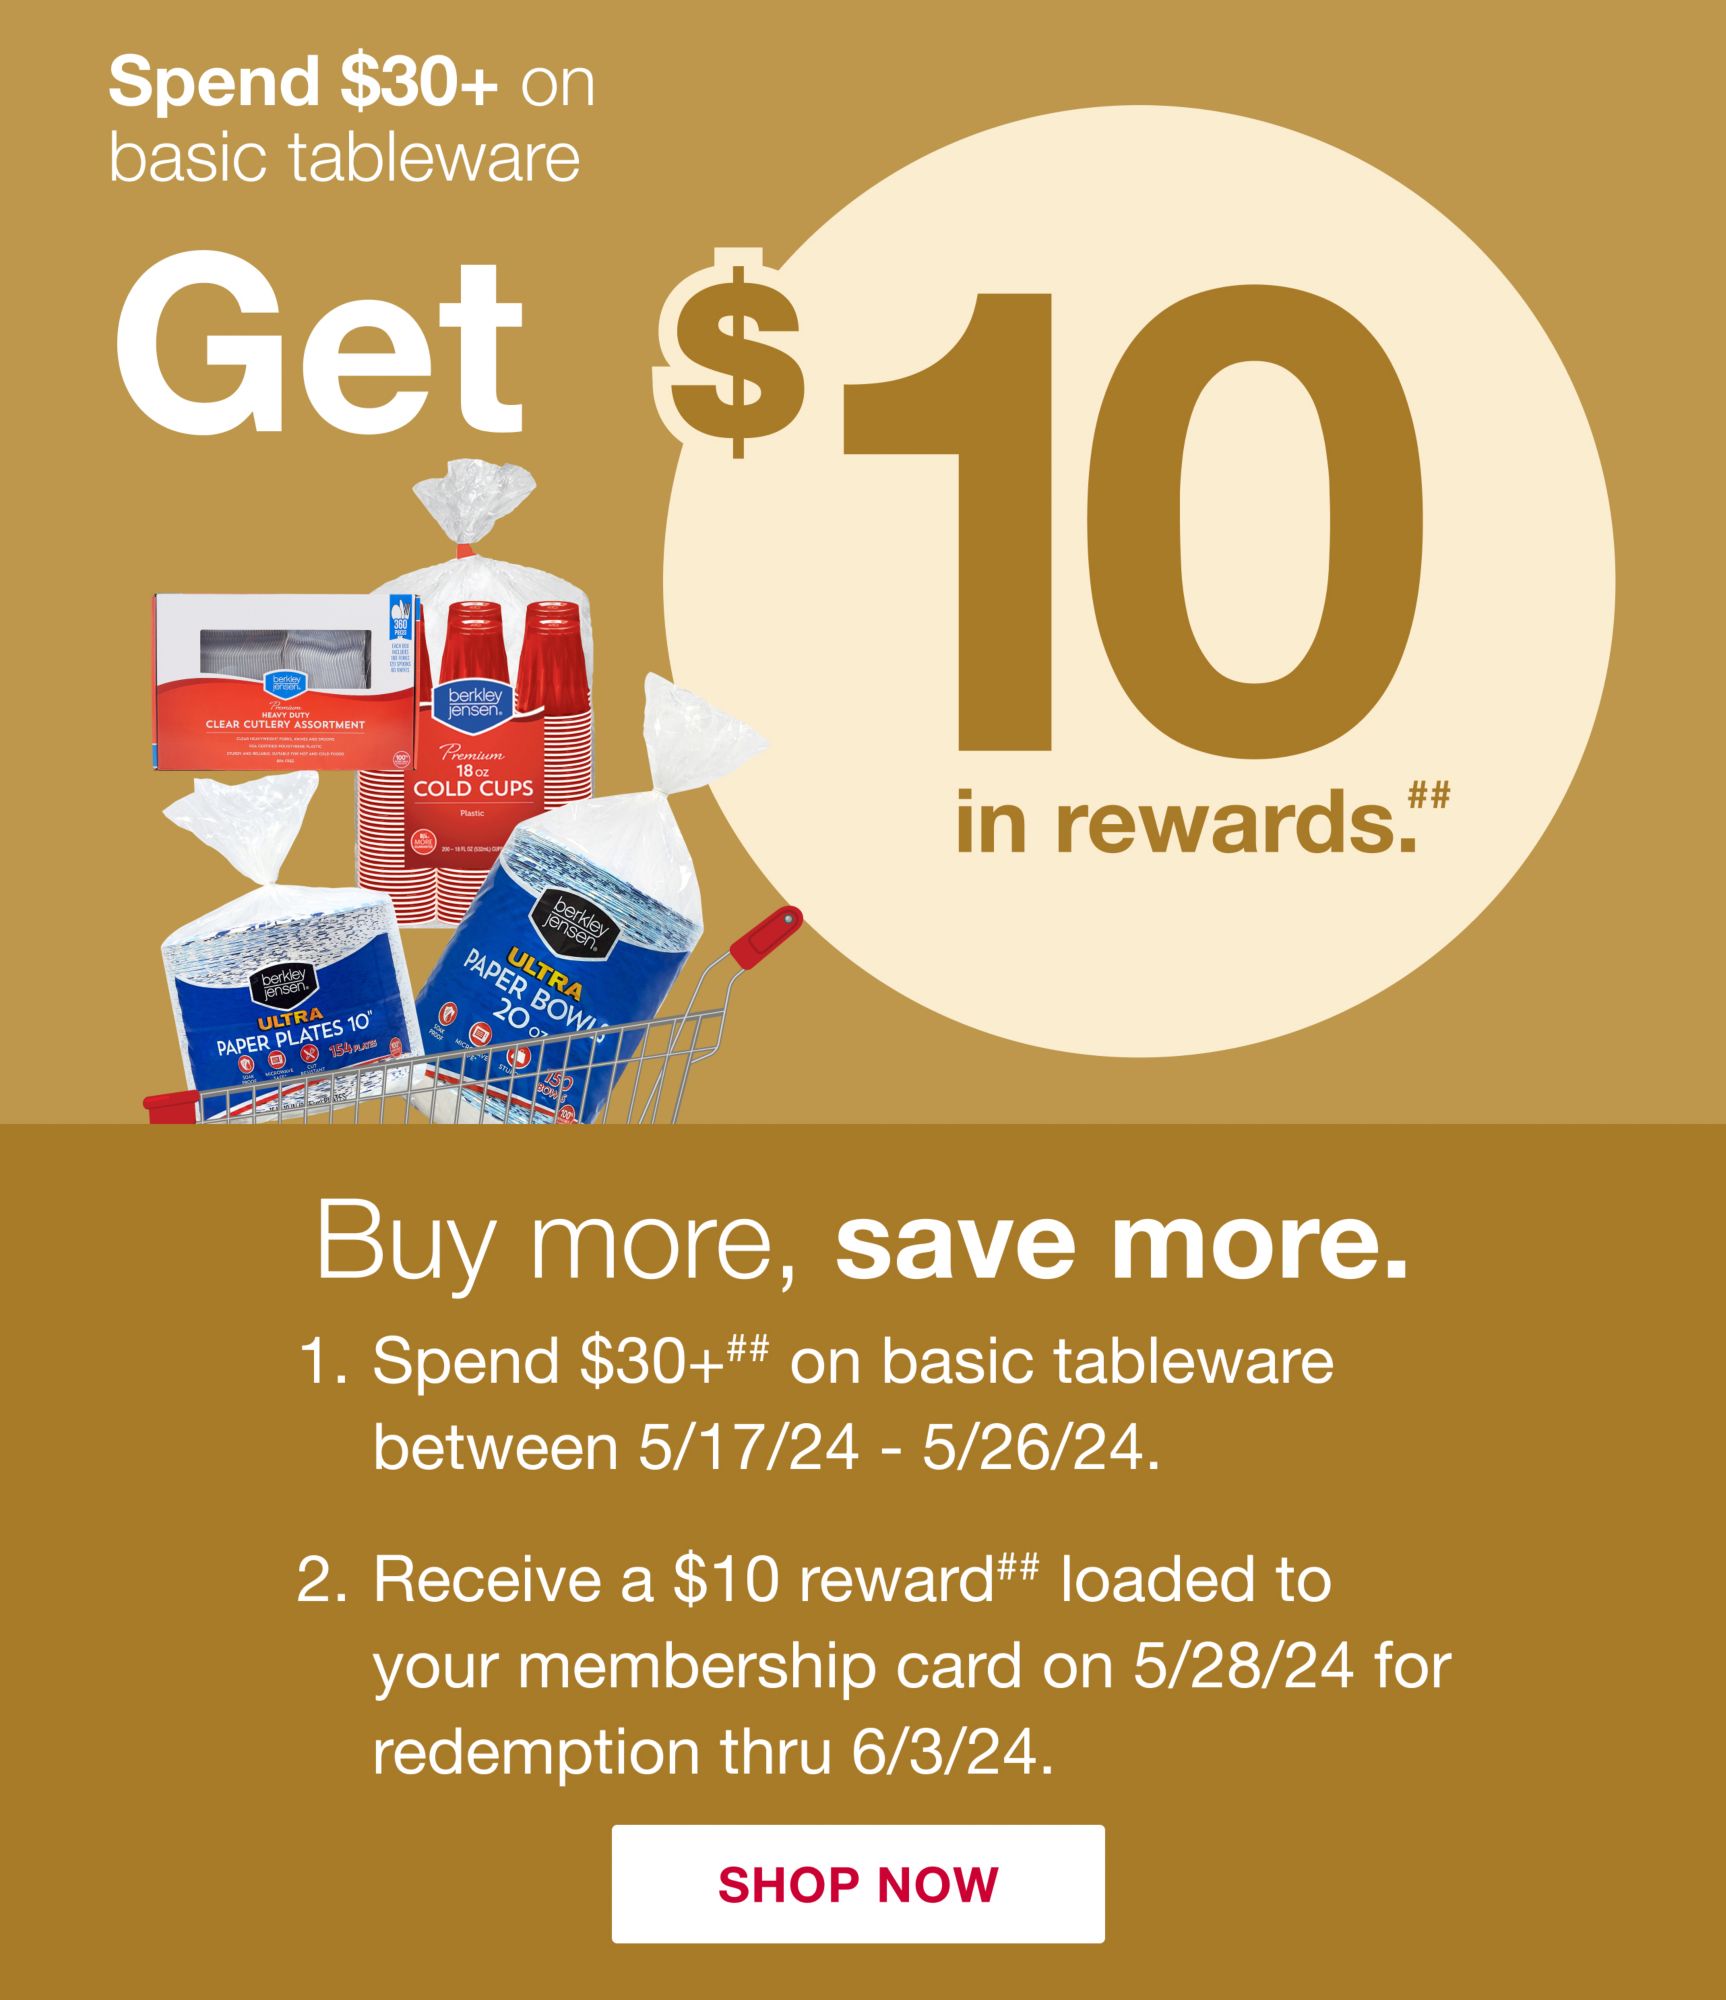 Save $30 on basic tableware, get $10 in rewards.